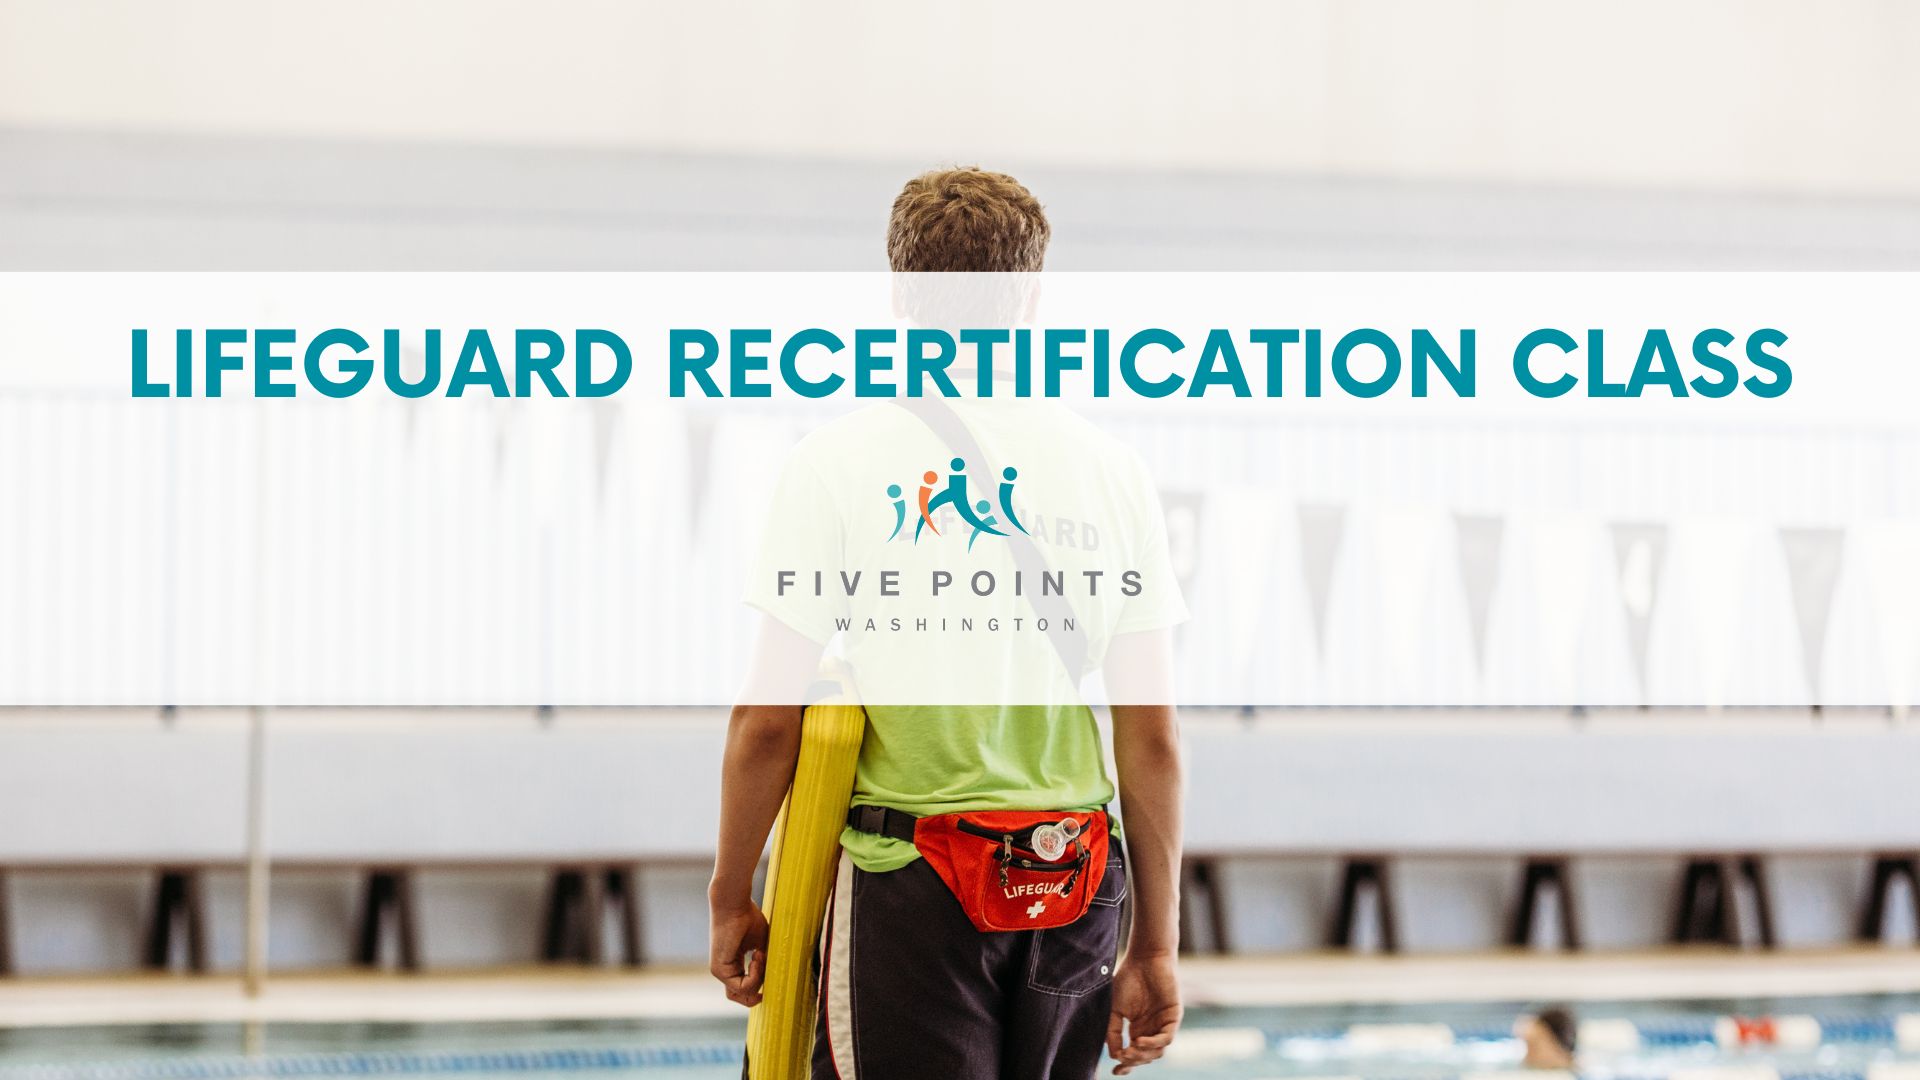 Lifeguard recertification class logo and illustration